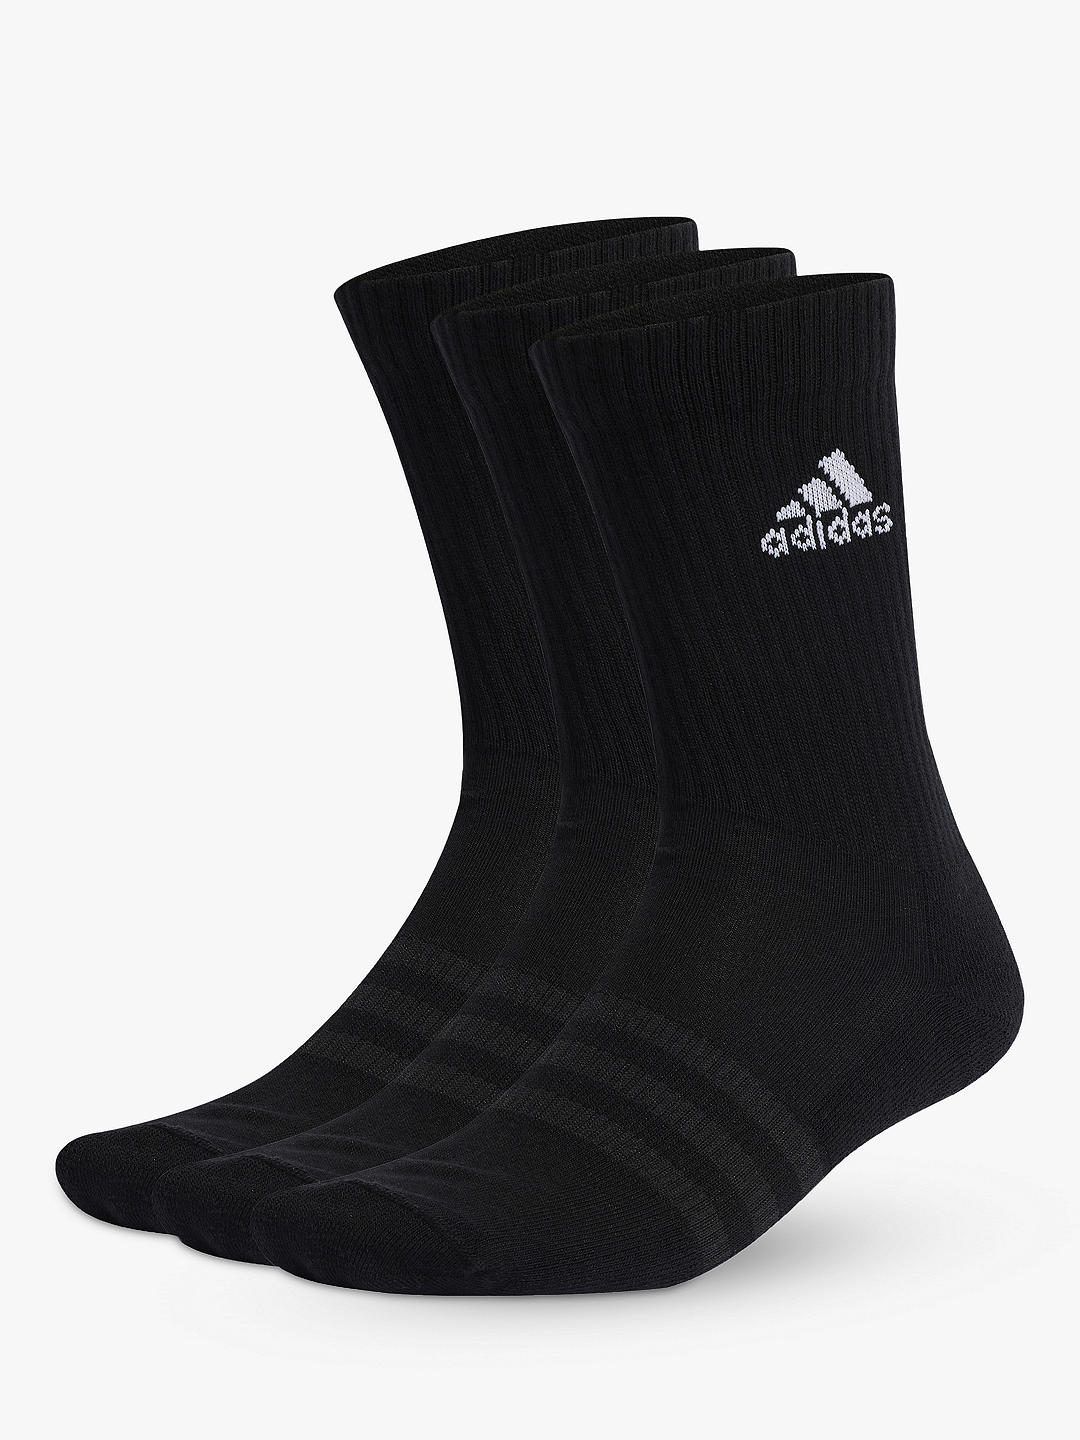 adidas Cushioned Crew Socks, Pack of 3, Black/White at John Lewis ...